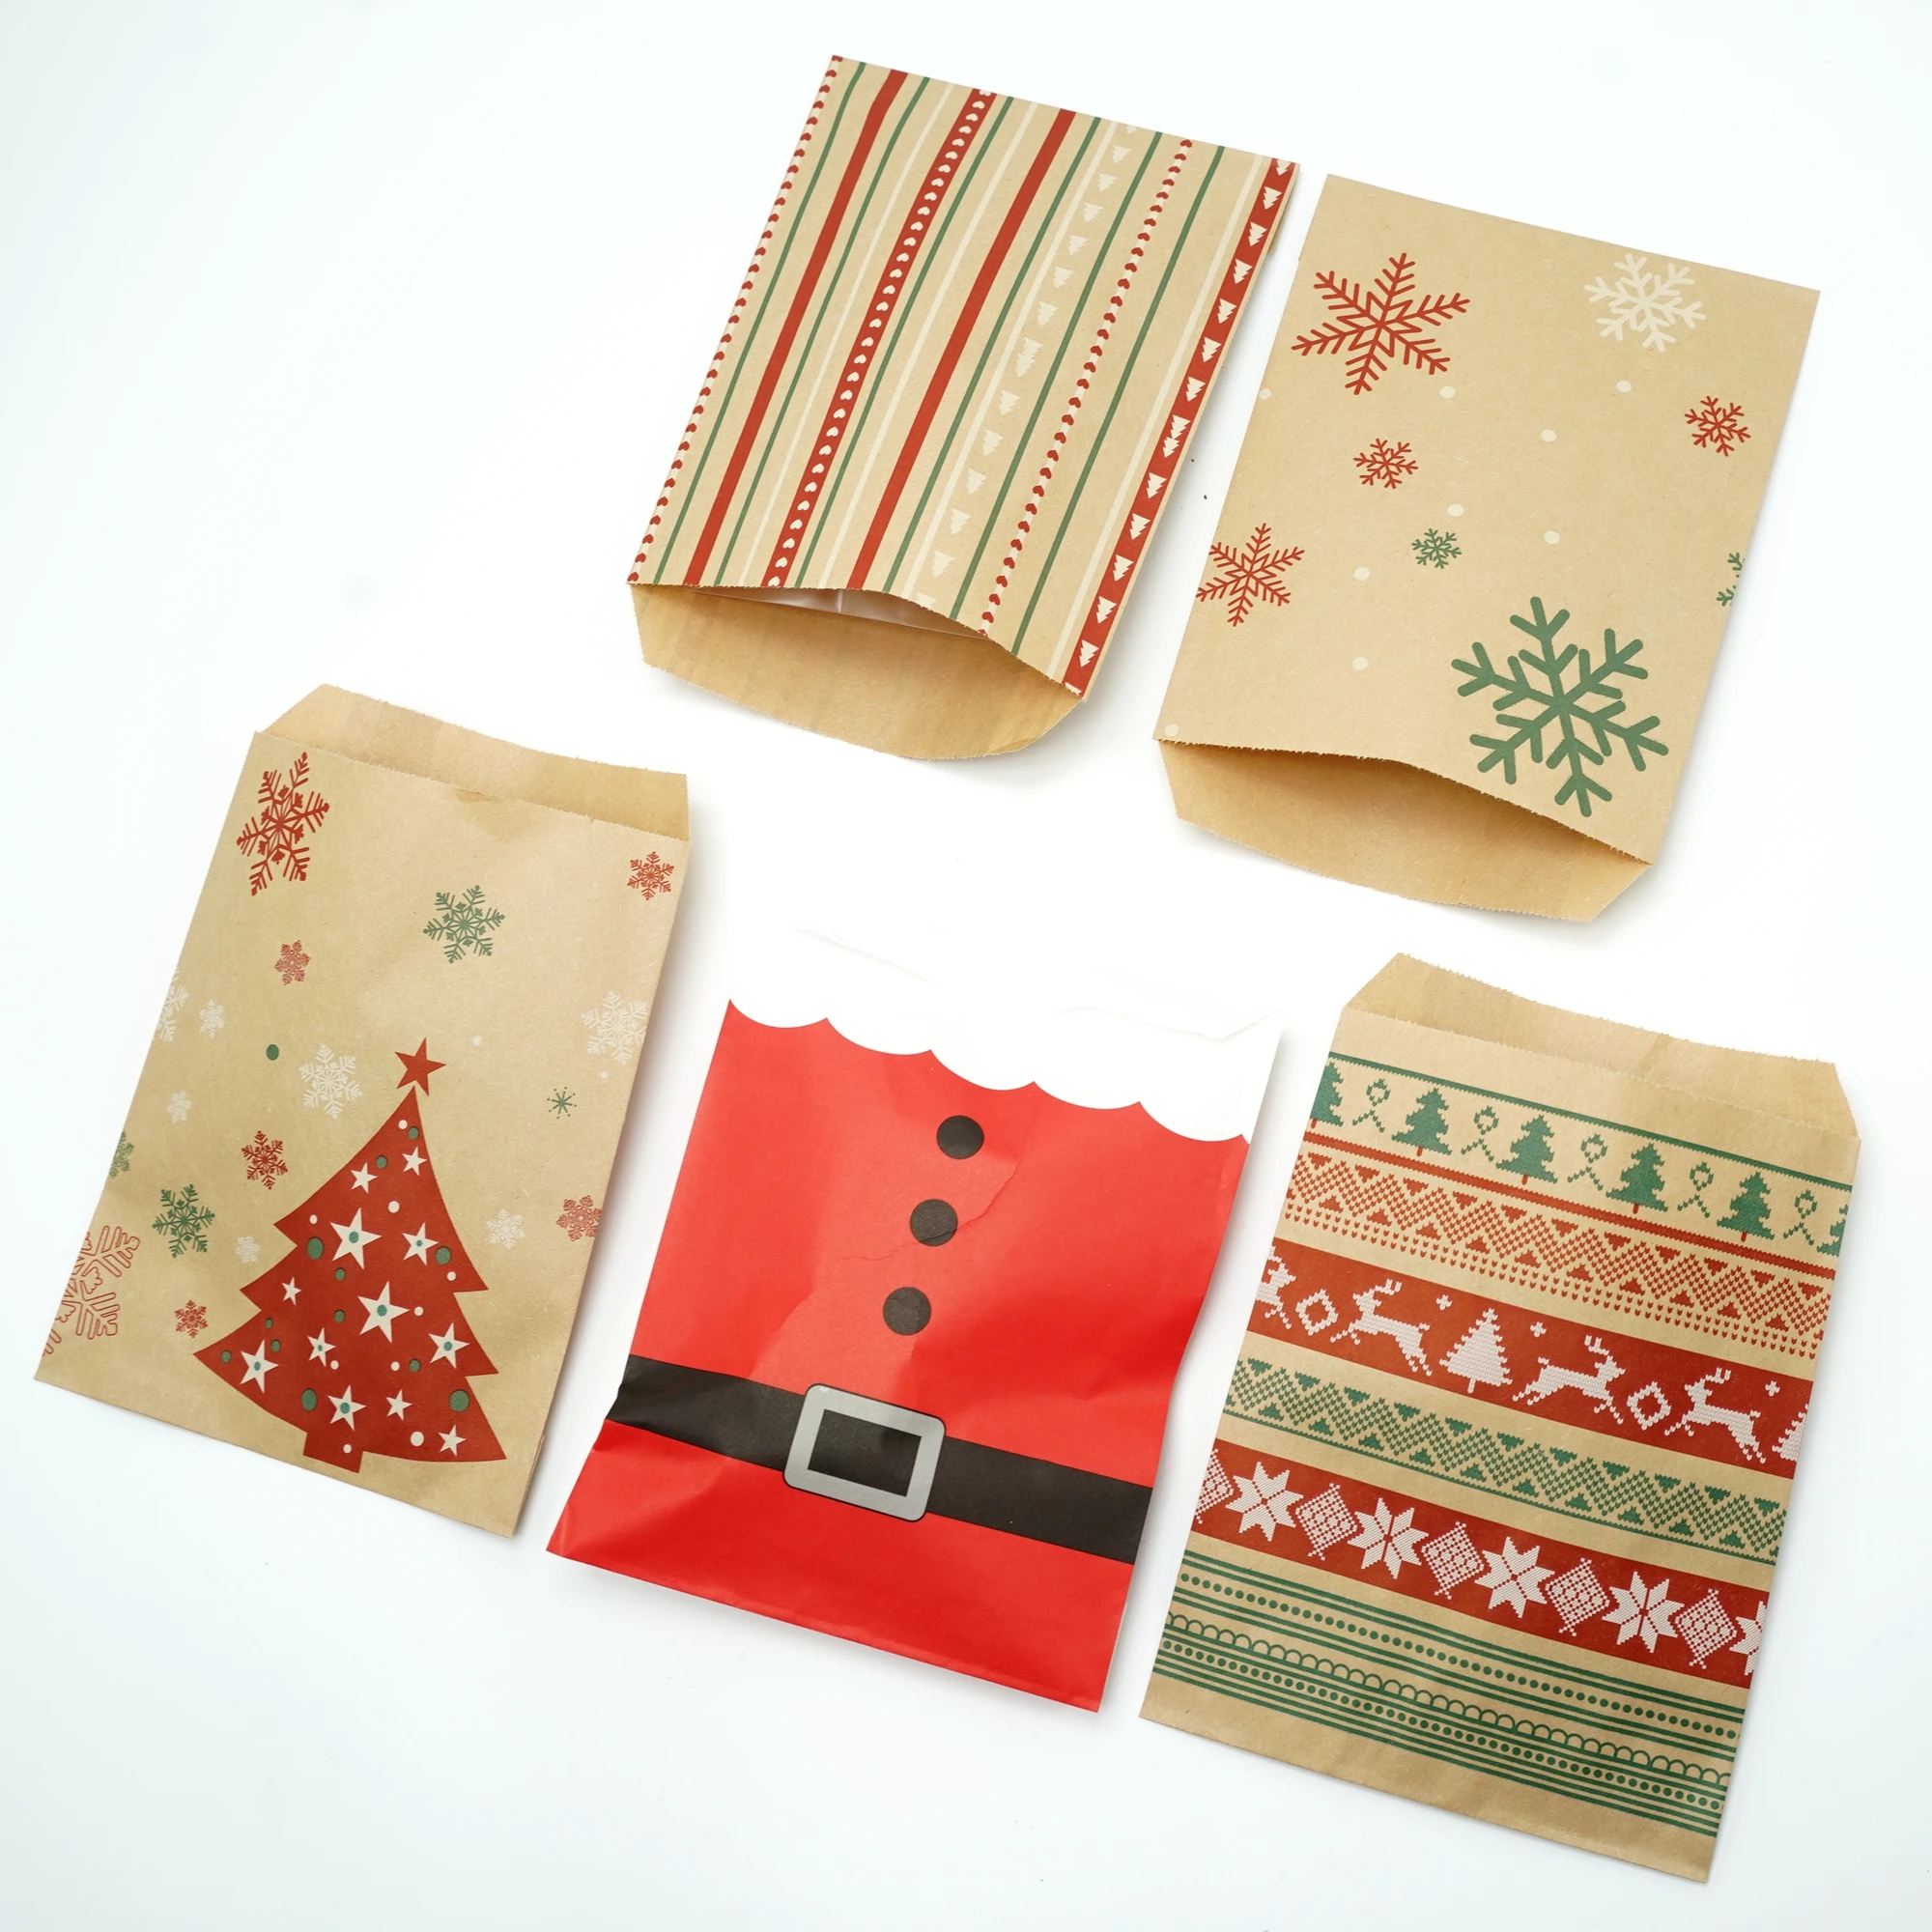 https://ae01.alicdn.com/kf/S9b458e44eecd46bfb249de7206f90d74u/Christmas-Gift-Bag-Kraft-Paper-Bags-Santa-Claus-Snowman-Xmas-Party-Candy-Bag-Cookie-Xmas-Packaging.jpg